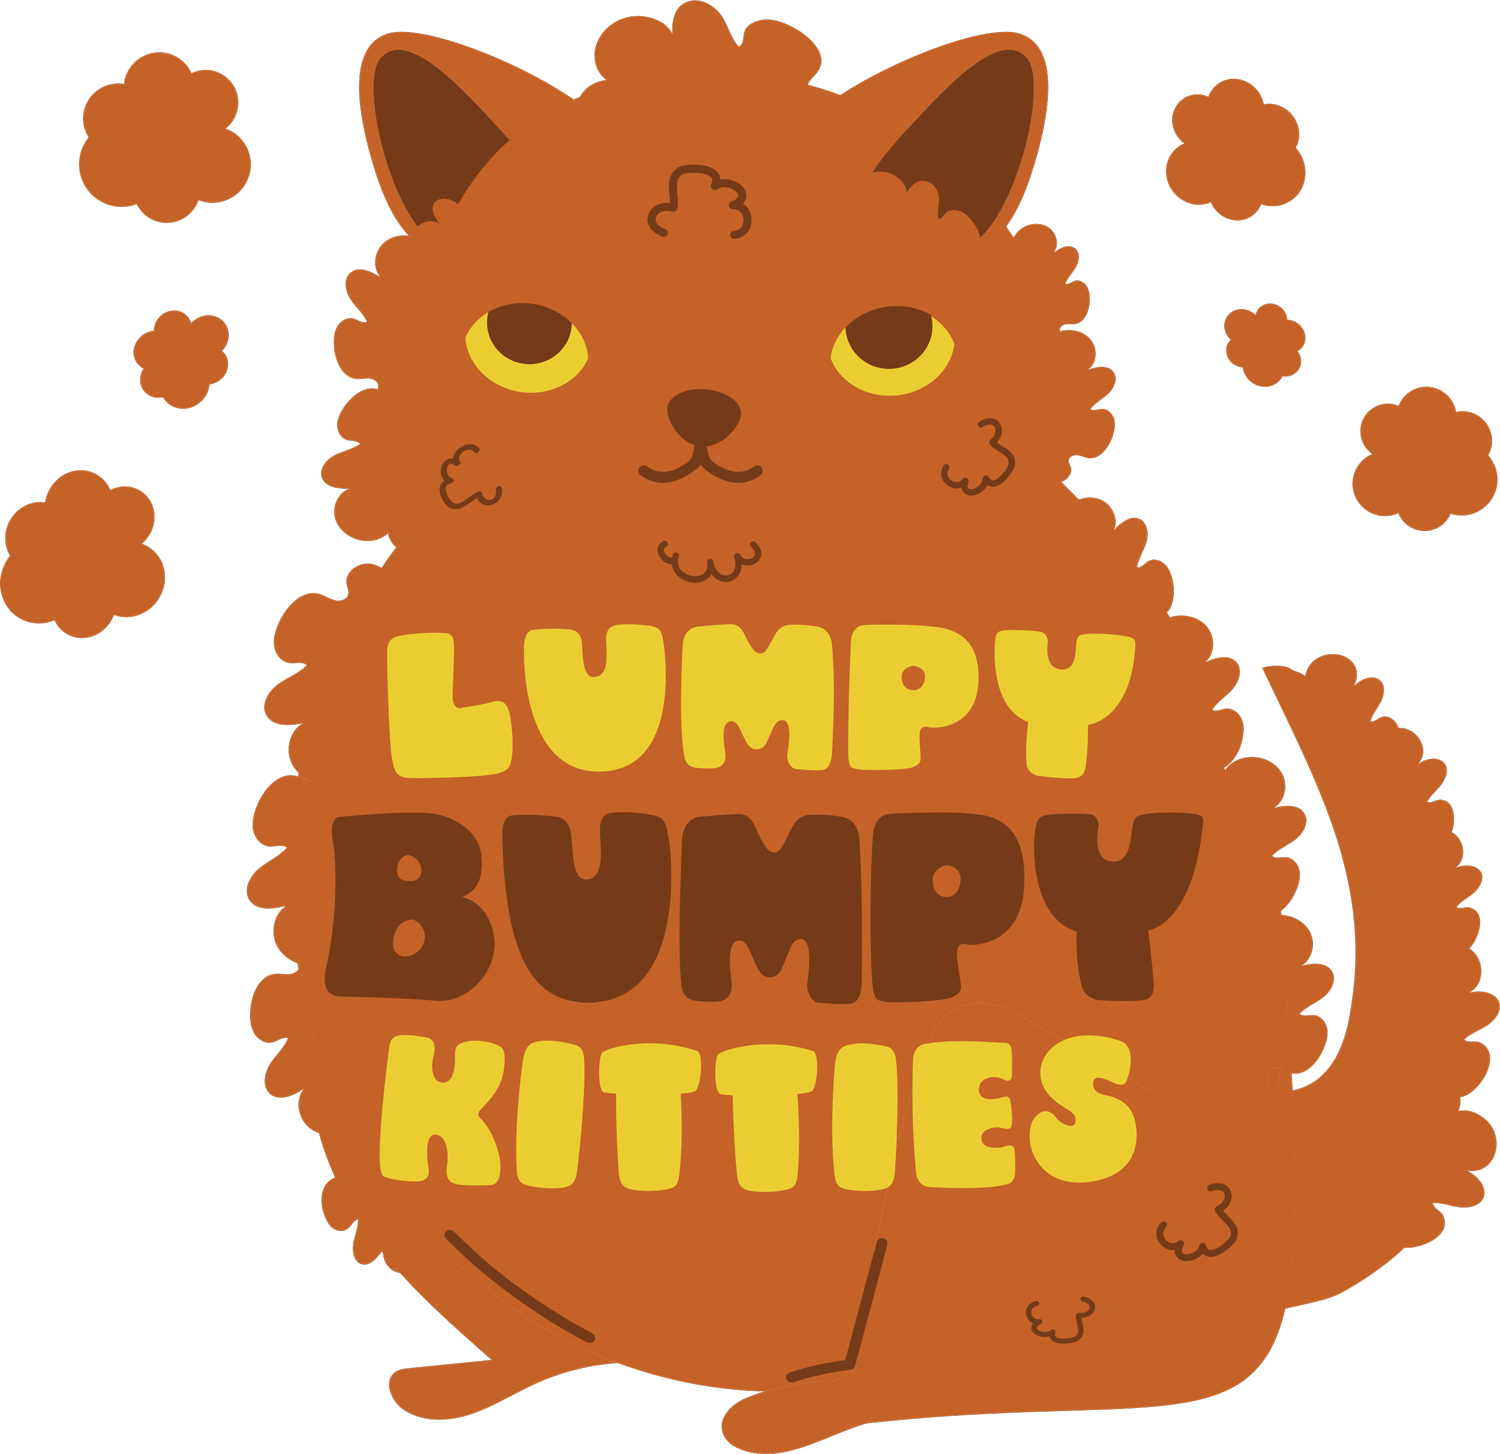 Lumpy Bumpy Kitties with orange furry cat illustration